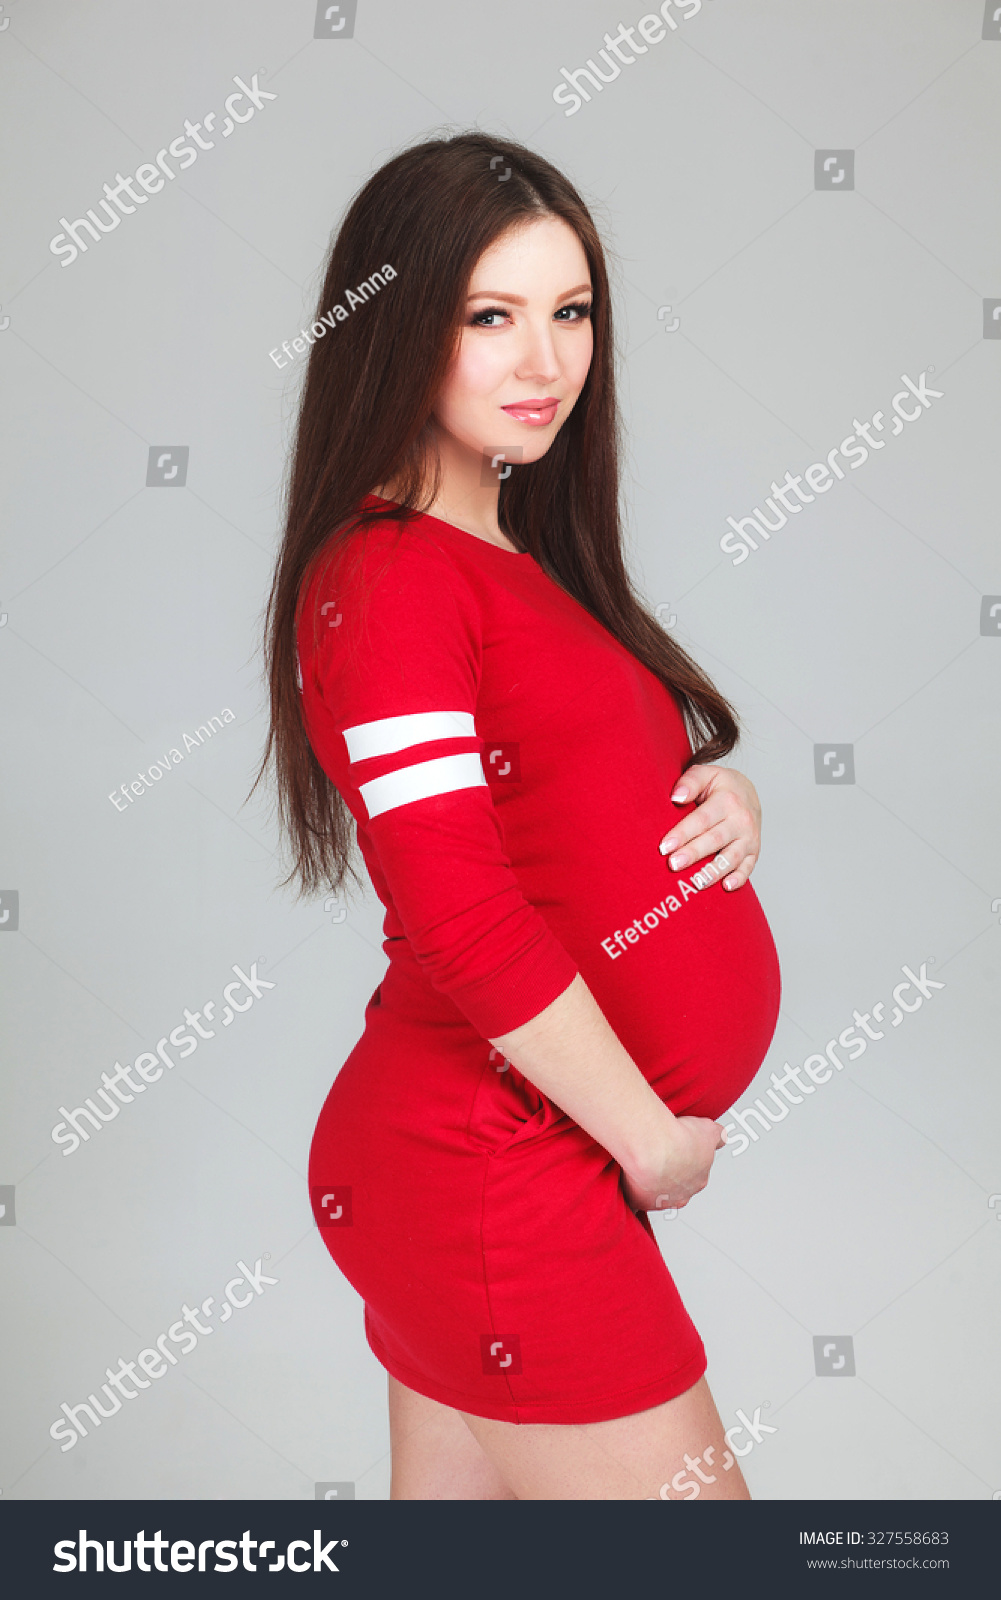 Hot Pregnant Pic